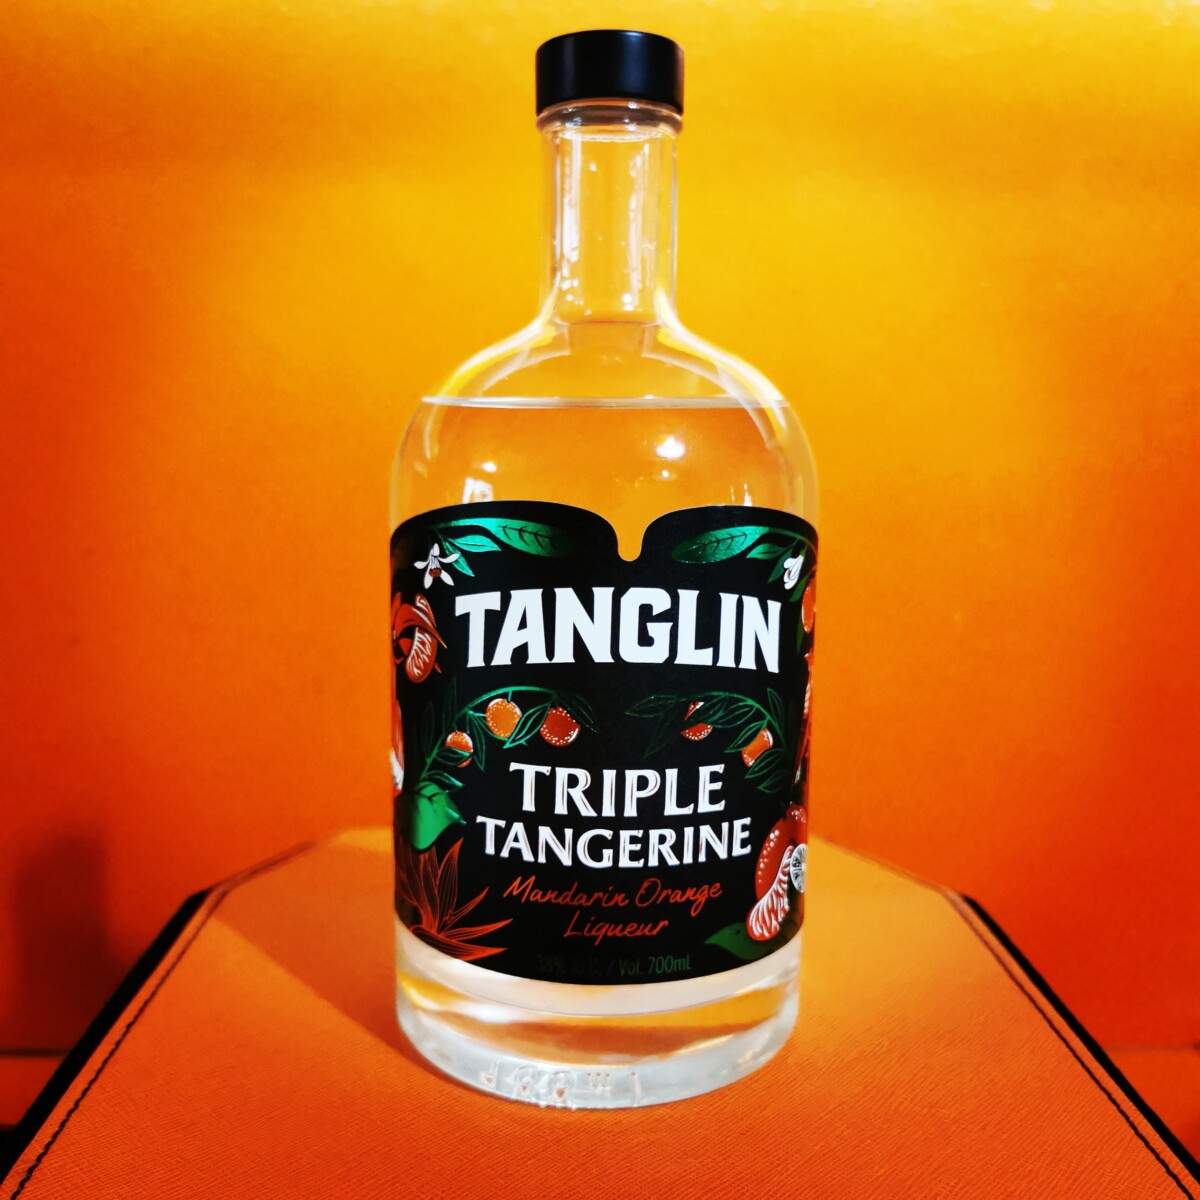 Tanglin Triple Tangerine Mandarin Orange Liqueur